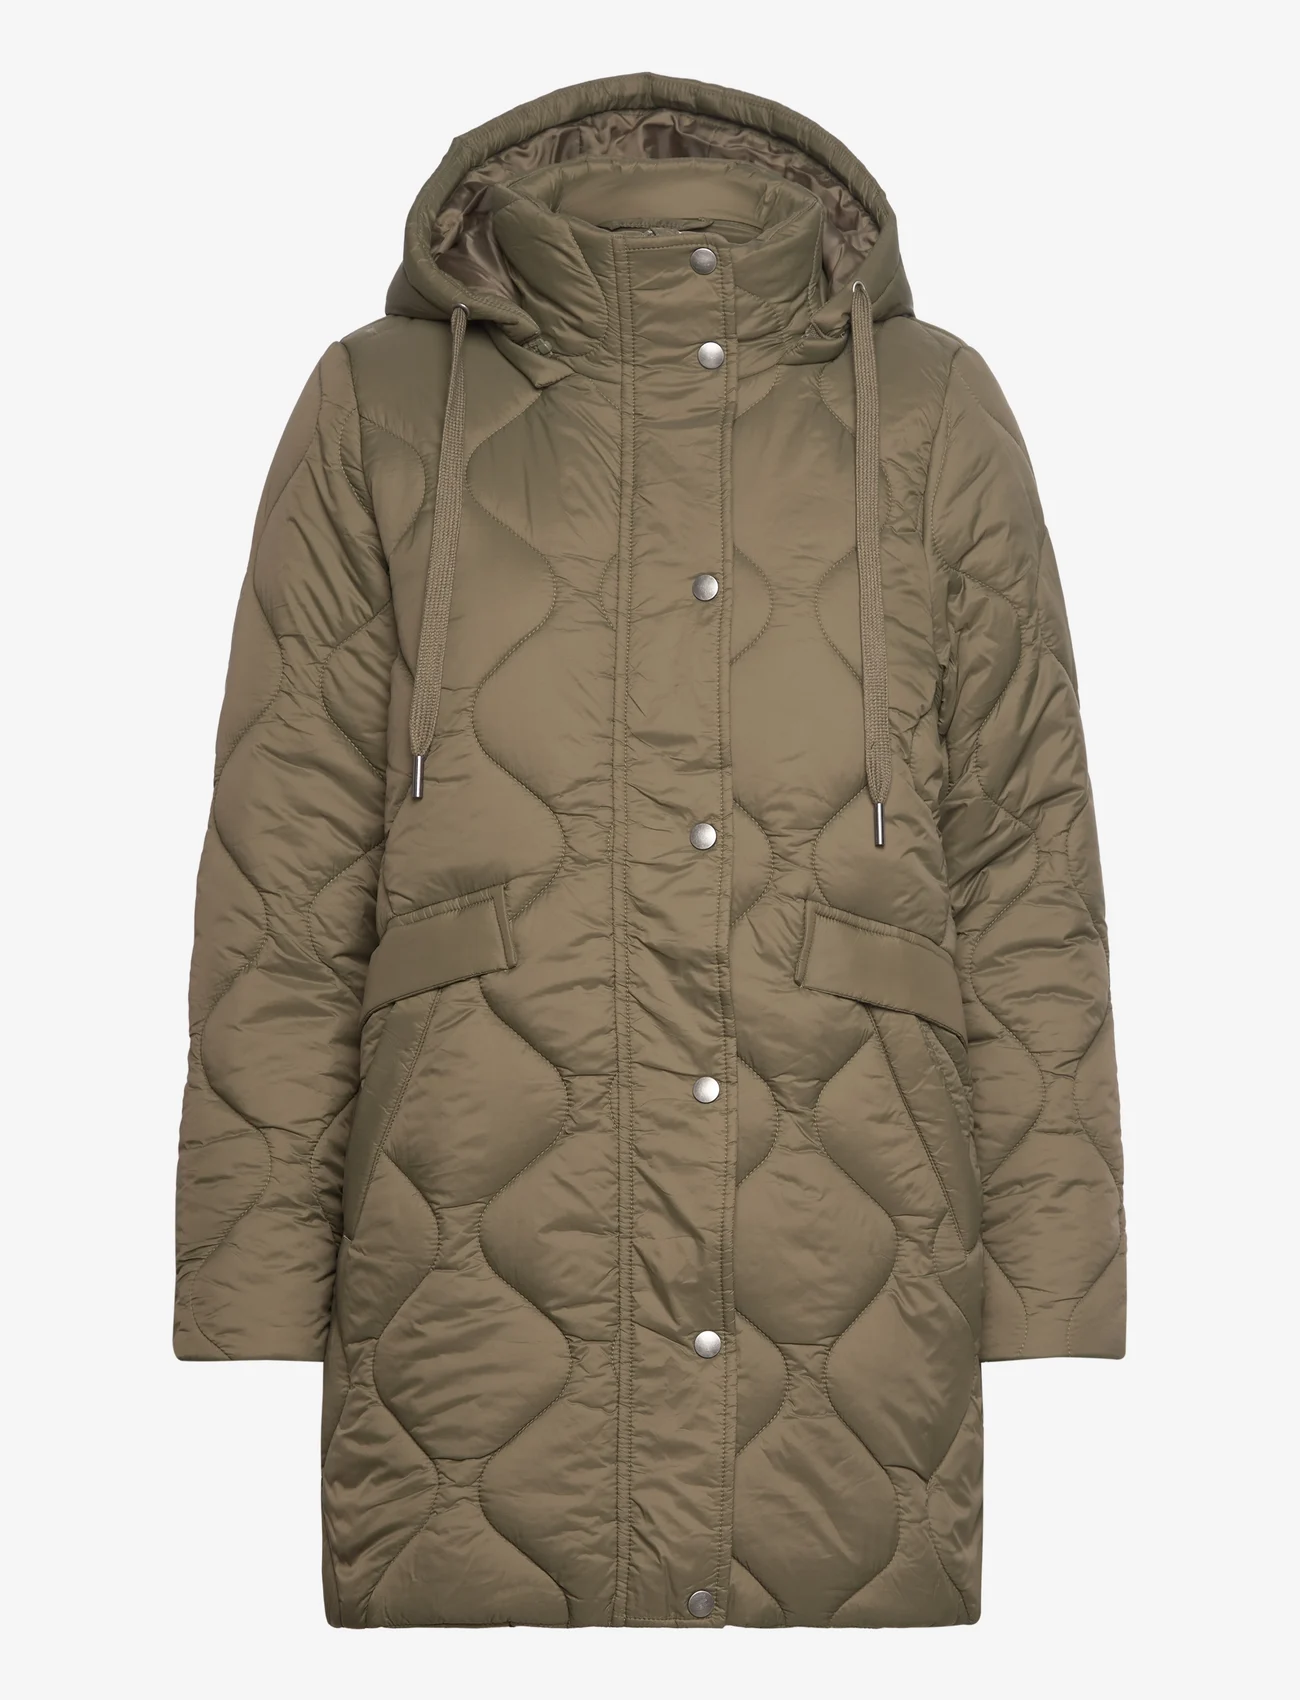 Cream - CRGaiagro Short Jacket - winter jackets - sea turtle - 0